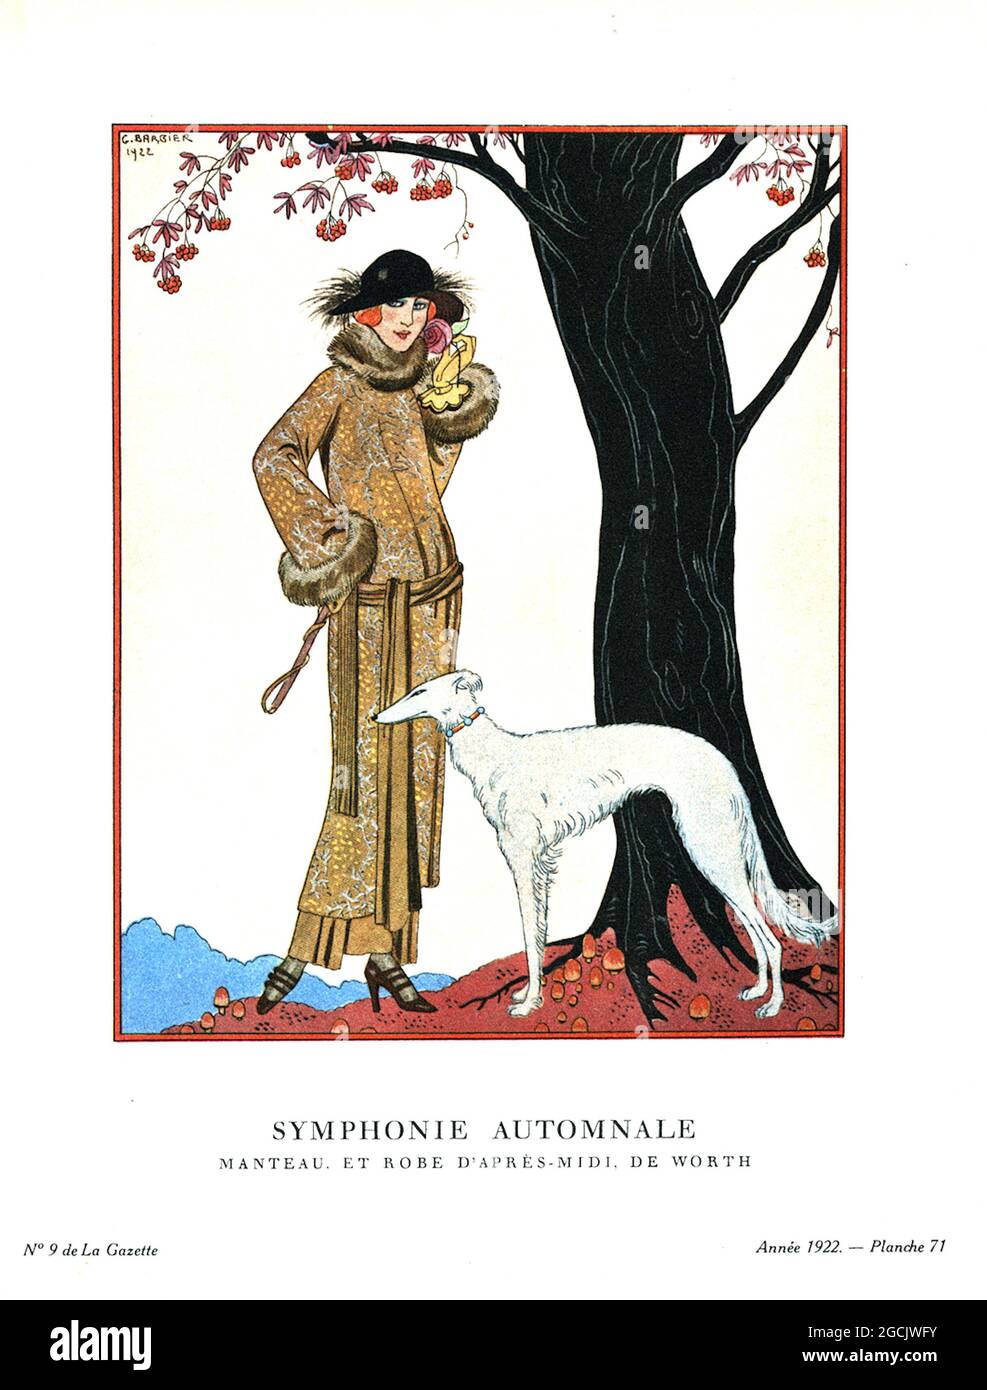 George Barbier Artwork - Symphonie Automnale - 1922 Stockfoto